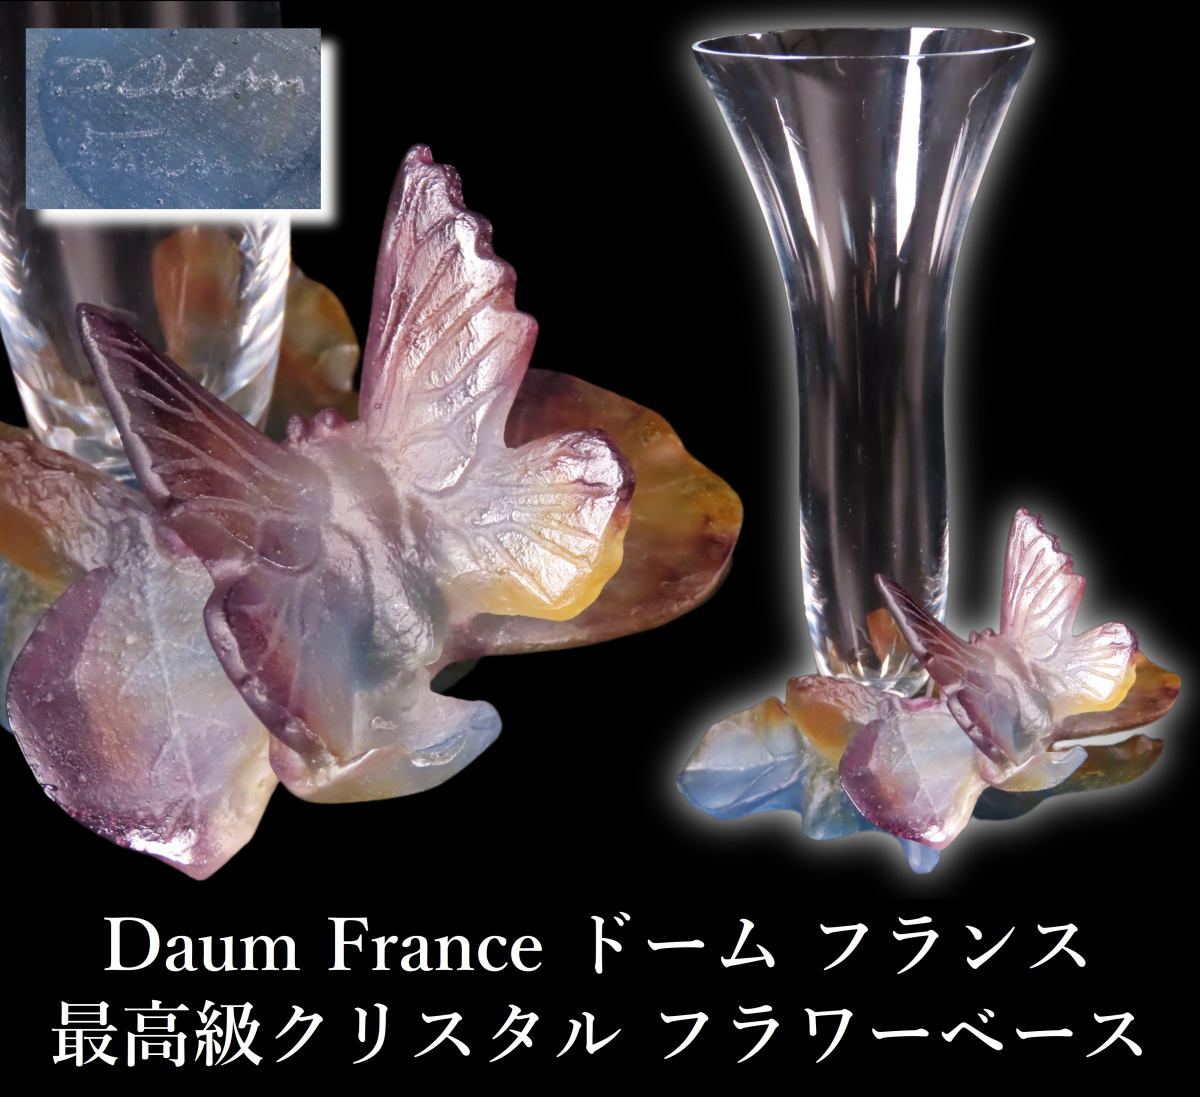 【ONE'S】Daum France ドーム フランス クリスタル 最高級作品 立体造形 フラワーベース 高21.2cm 花瓶 グラス オブジェ 飾物 西洋美術_画像1